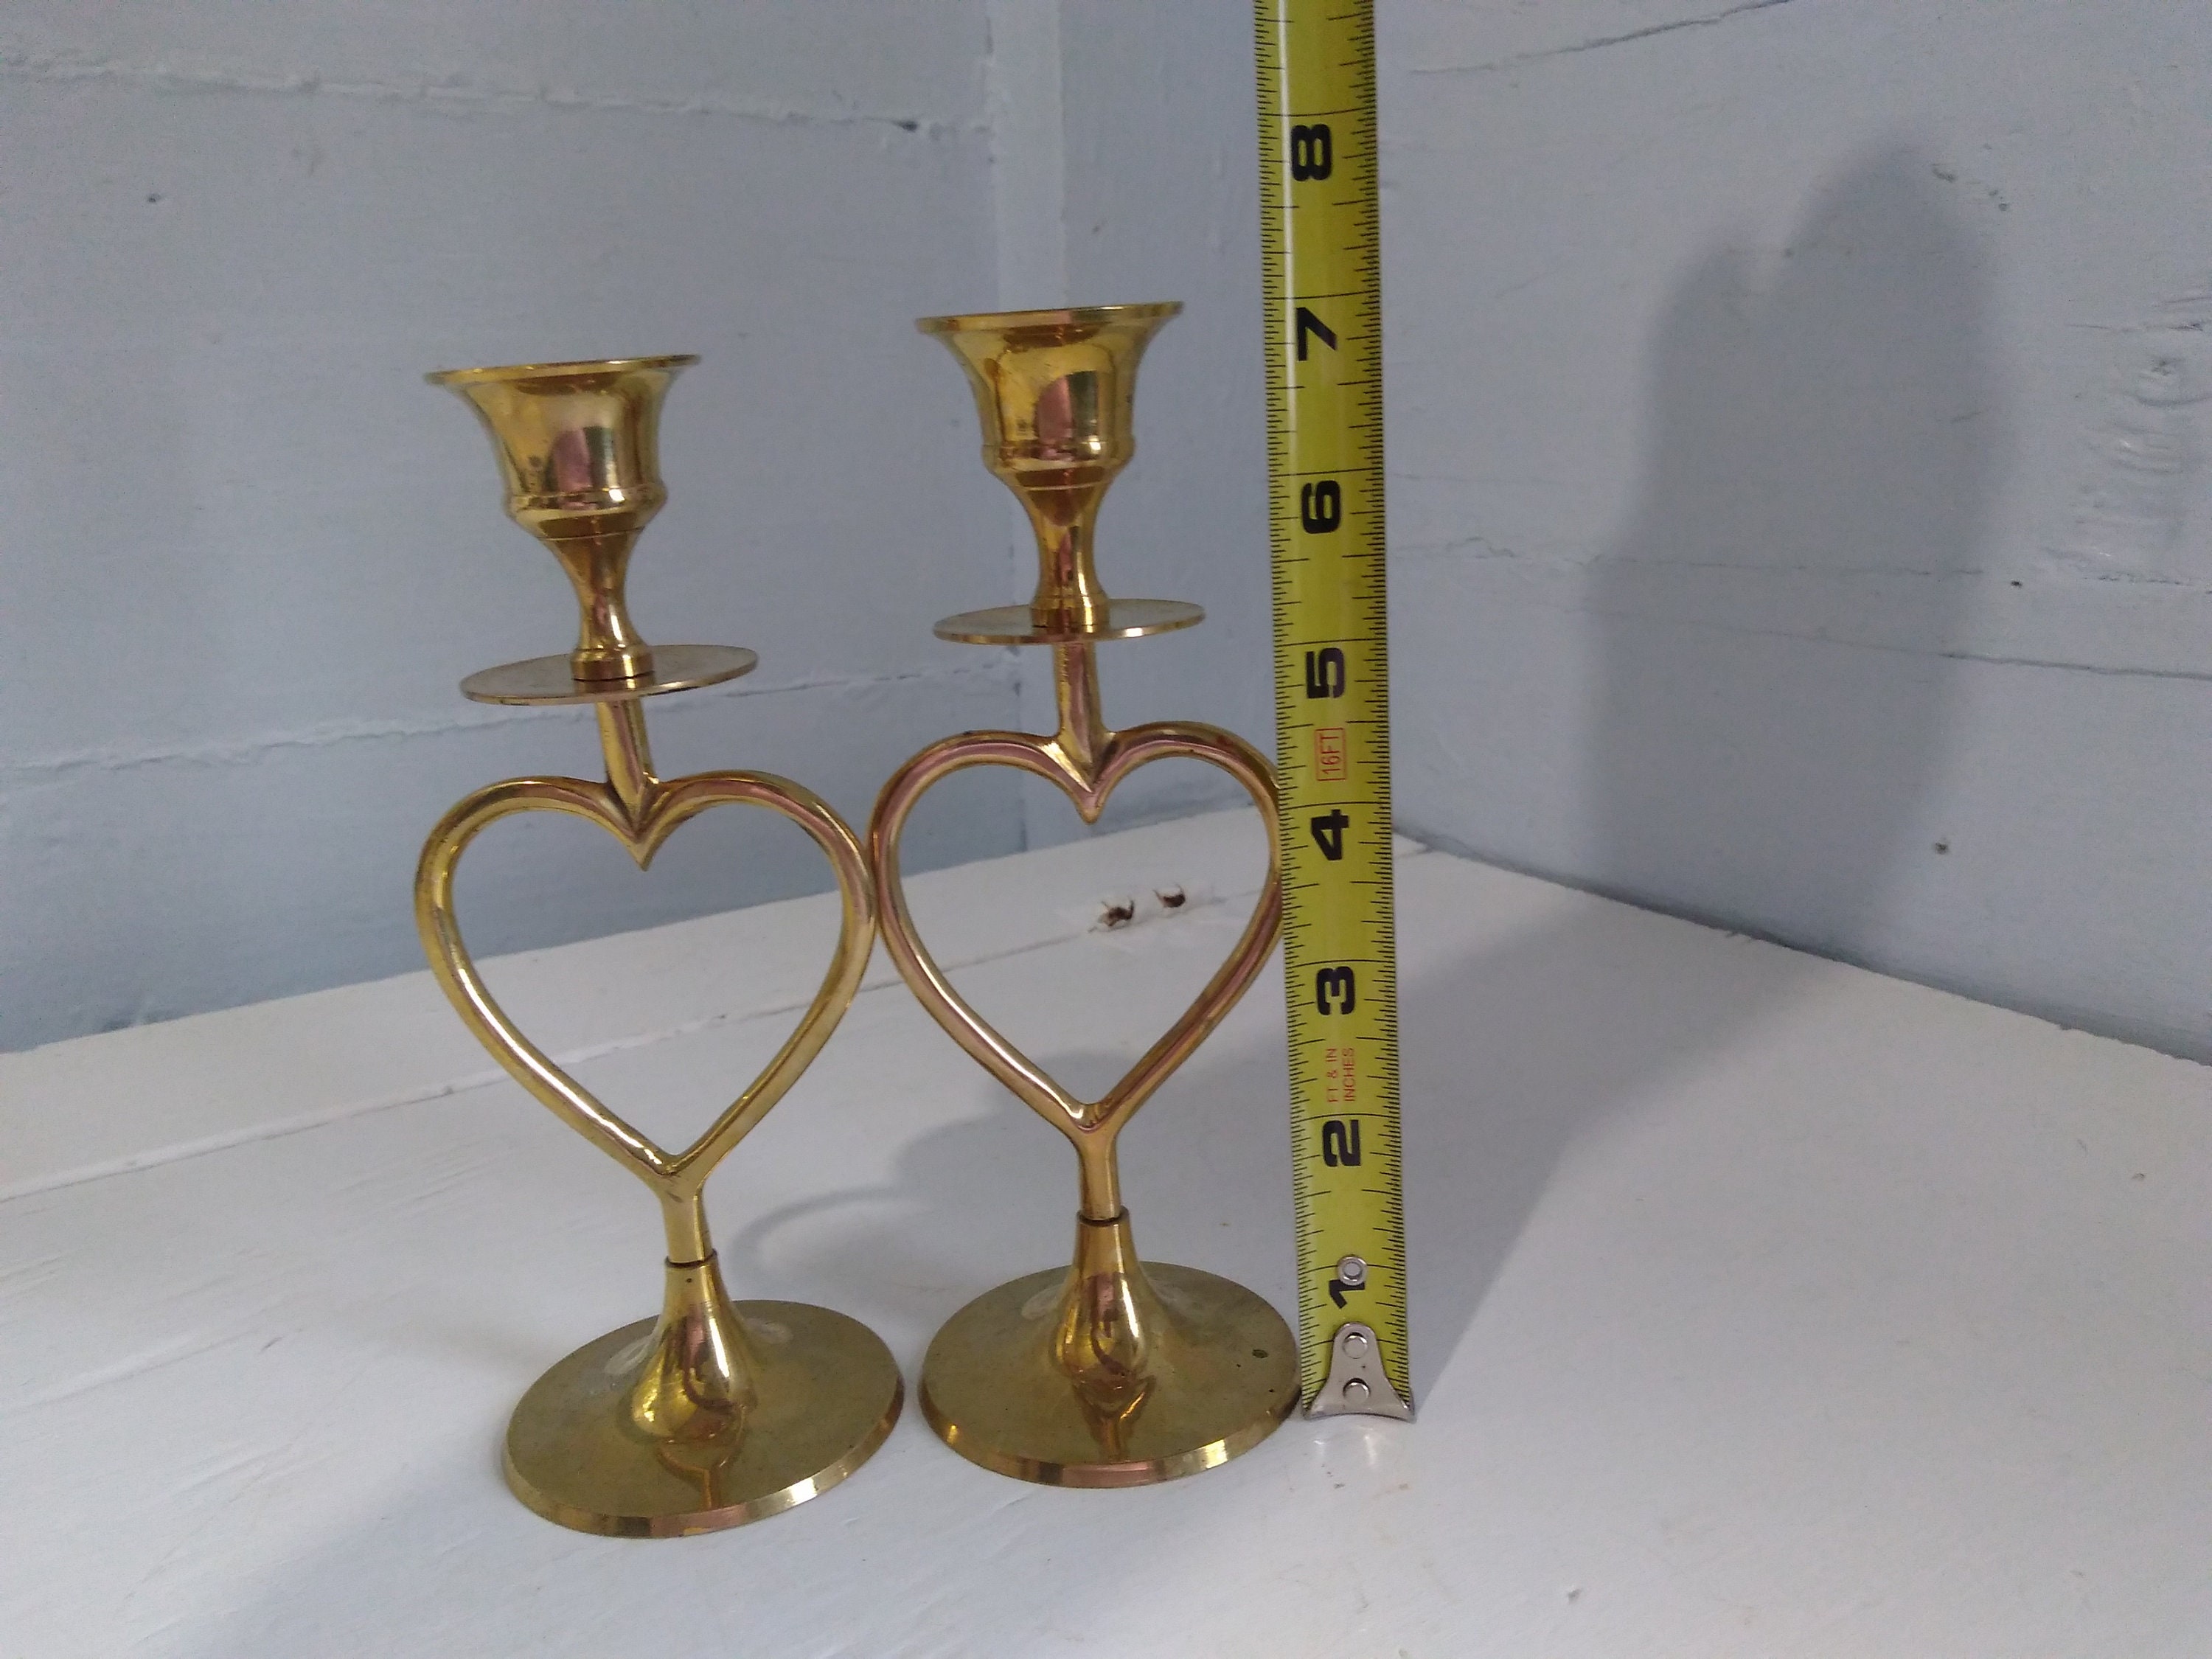 Vintage Heart Shaped Candlestick Holders Brass Tall Round Base Mantel Decor  Wedding Decor Photo Prop RhymeswithDaughter